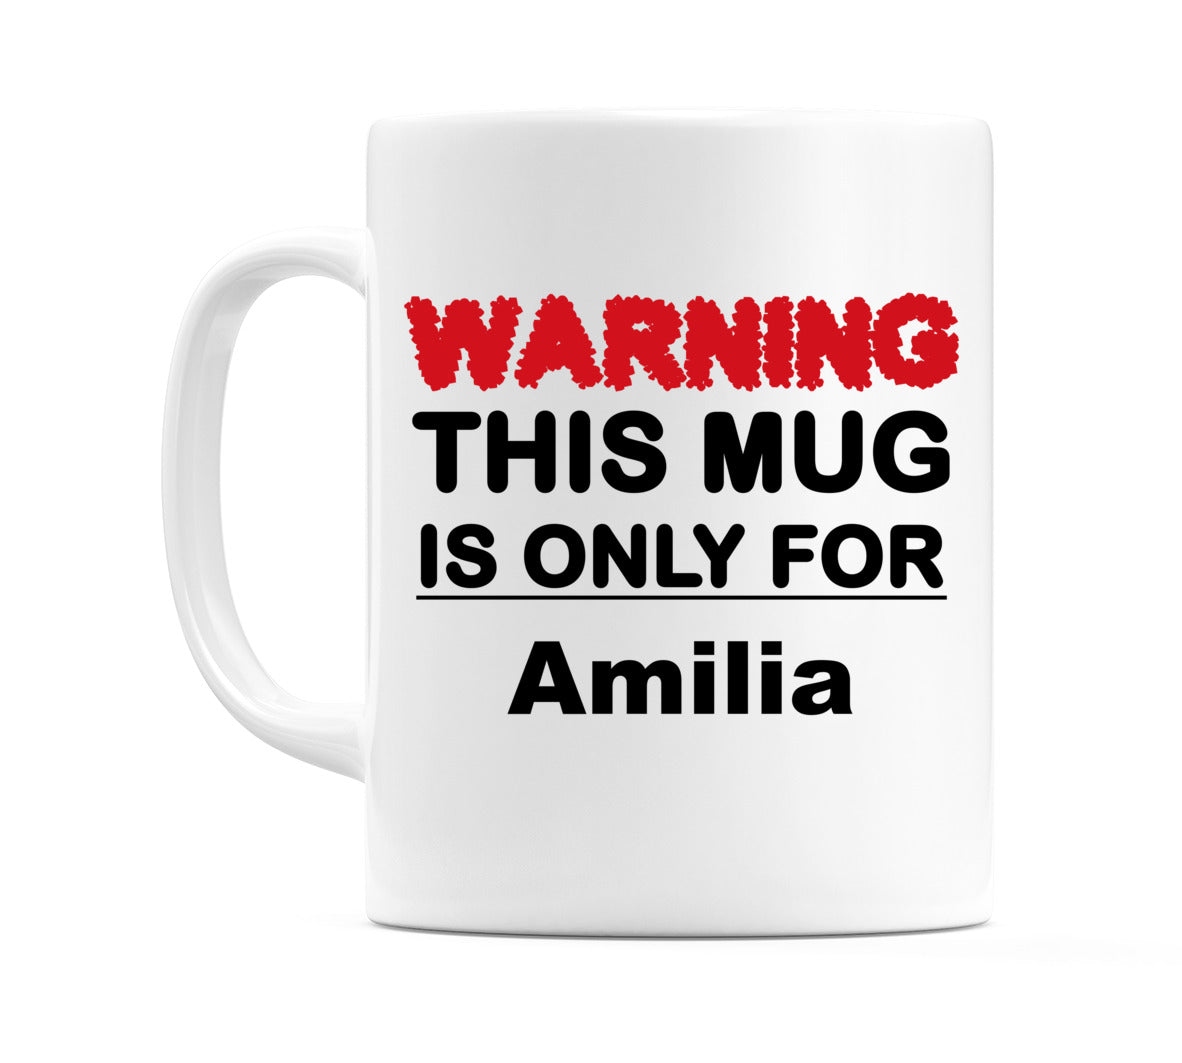 Warning This Mug is ONLY for Amilia Mug